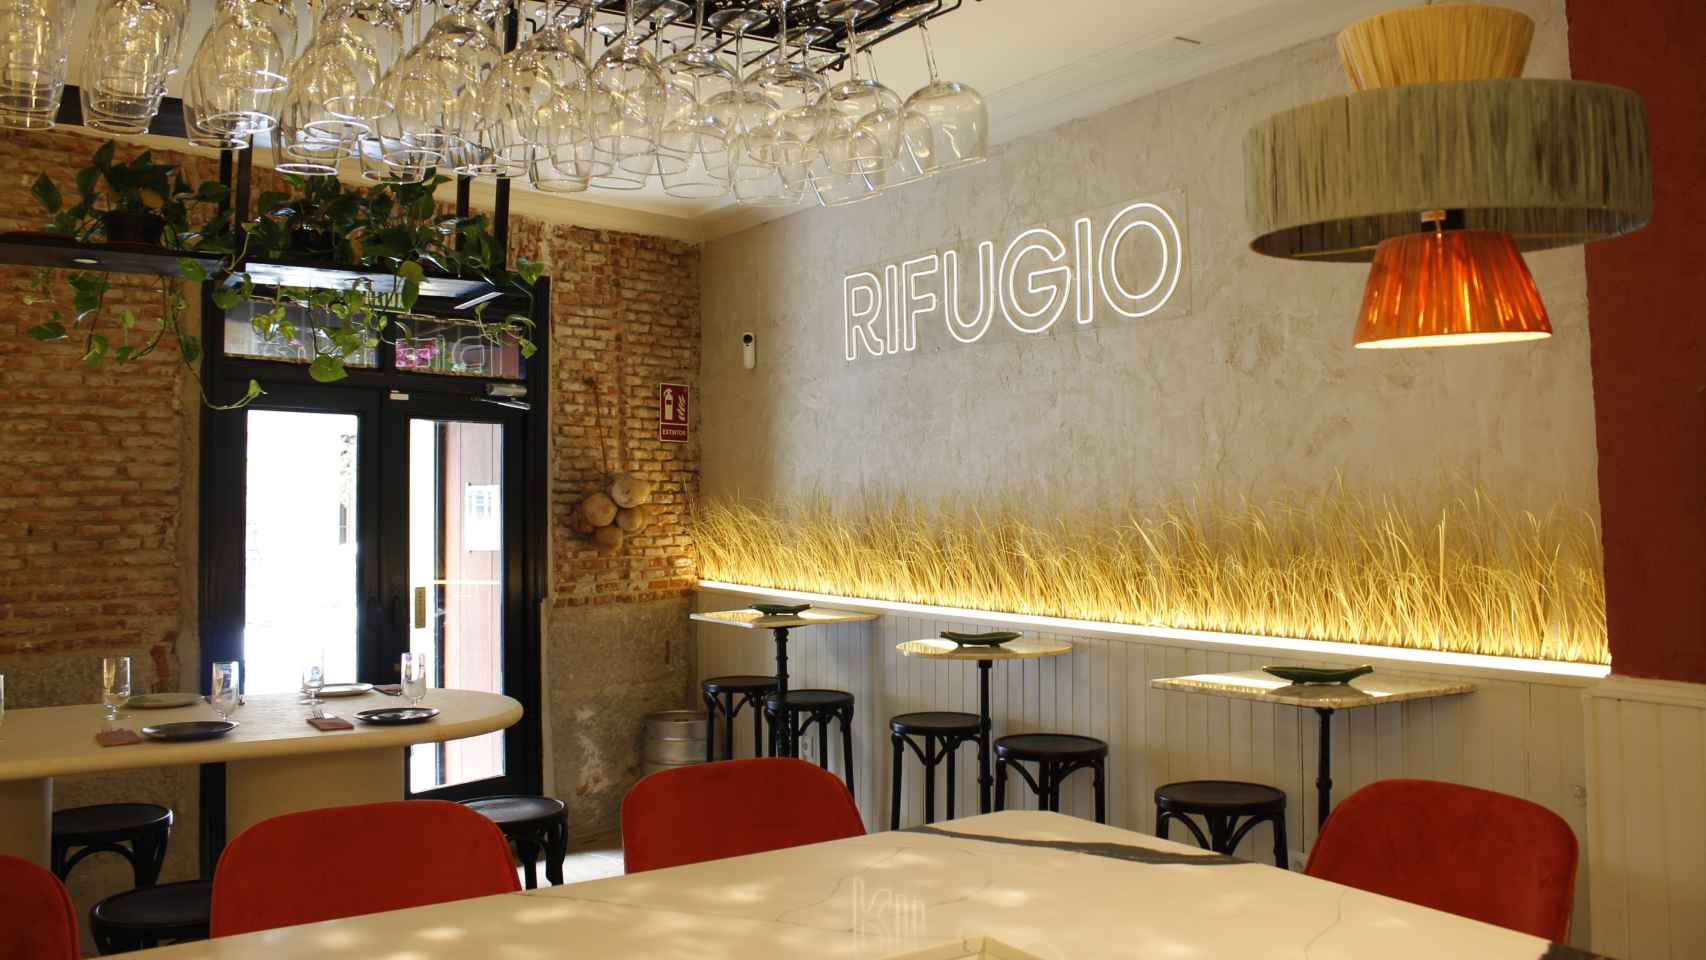 Restaurante Rifugio.